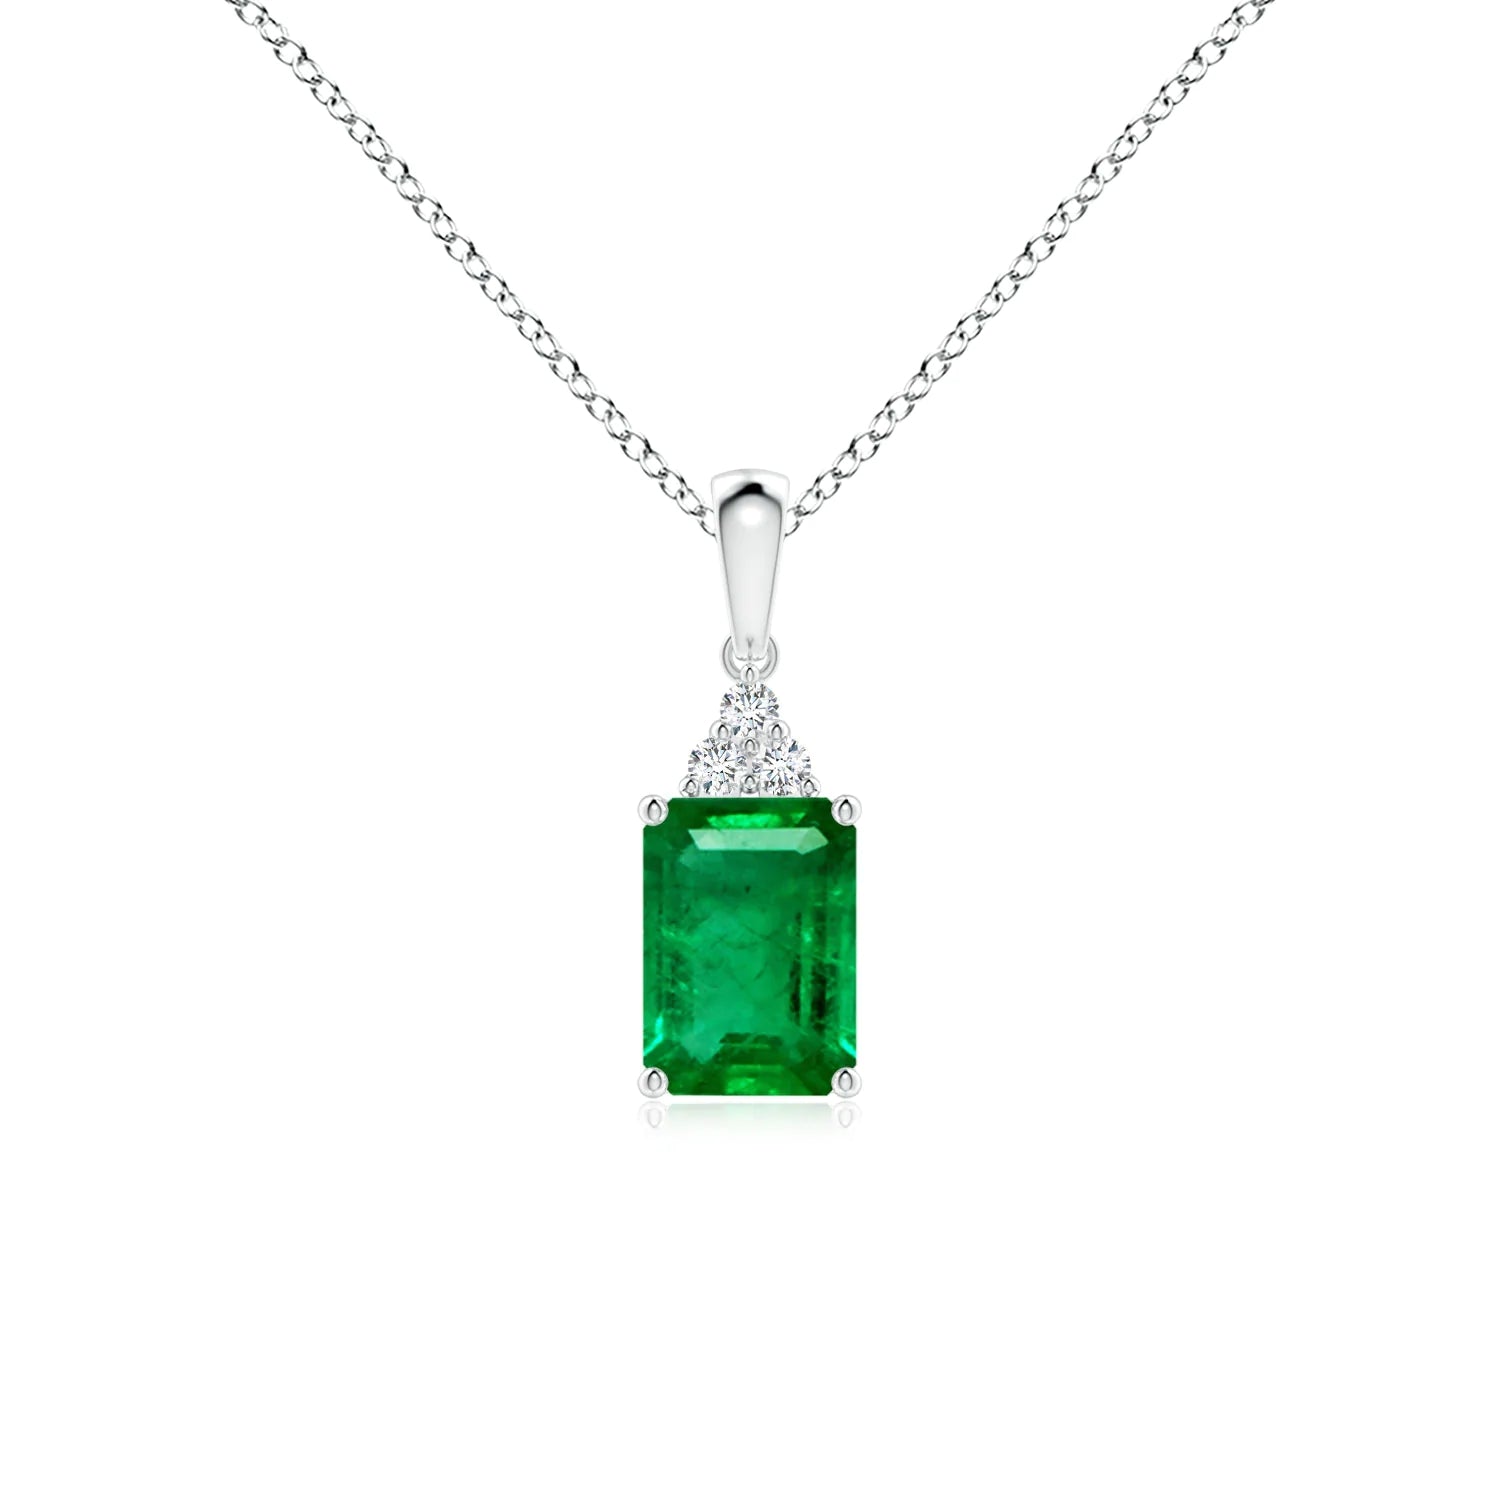 1.3 CT. Emerald-Cut Emerald Pendant with White Sapphire